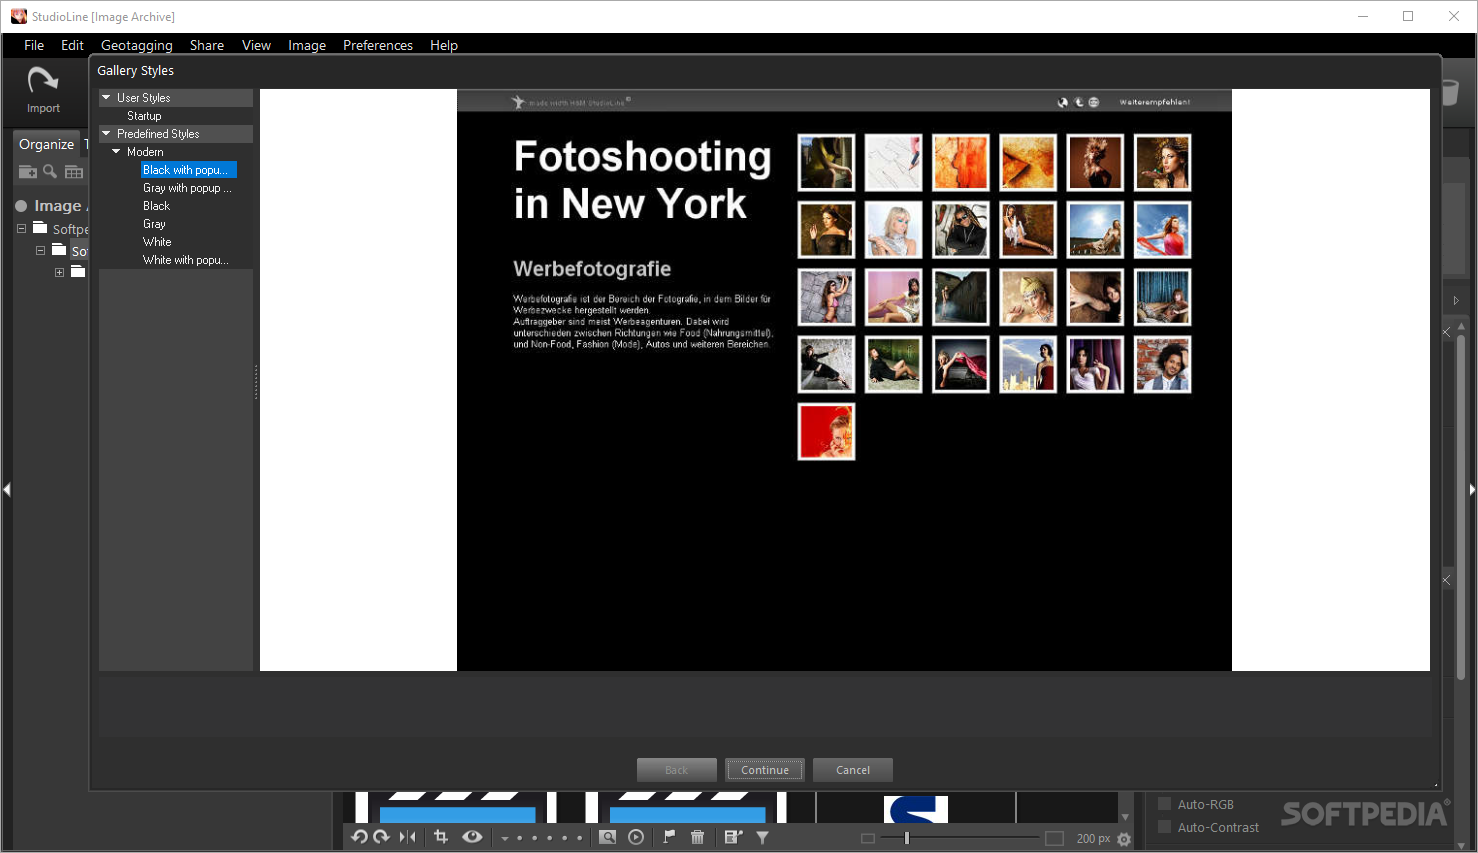 StudioLine Photo Basic / Pro 5.0.6 instal the last version for ipod